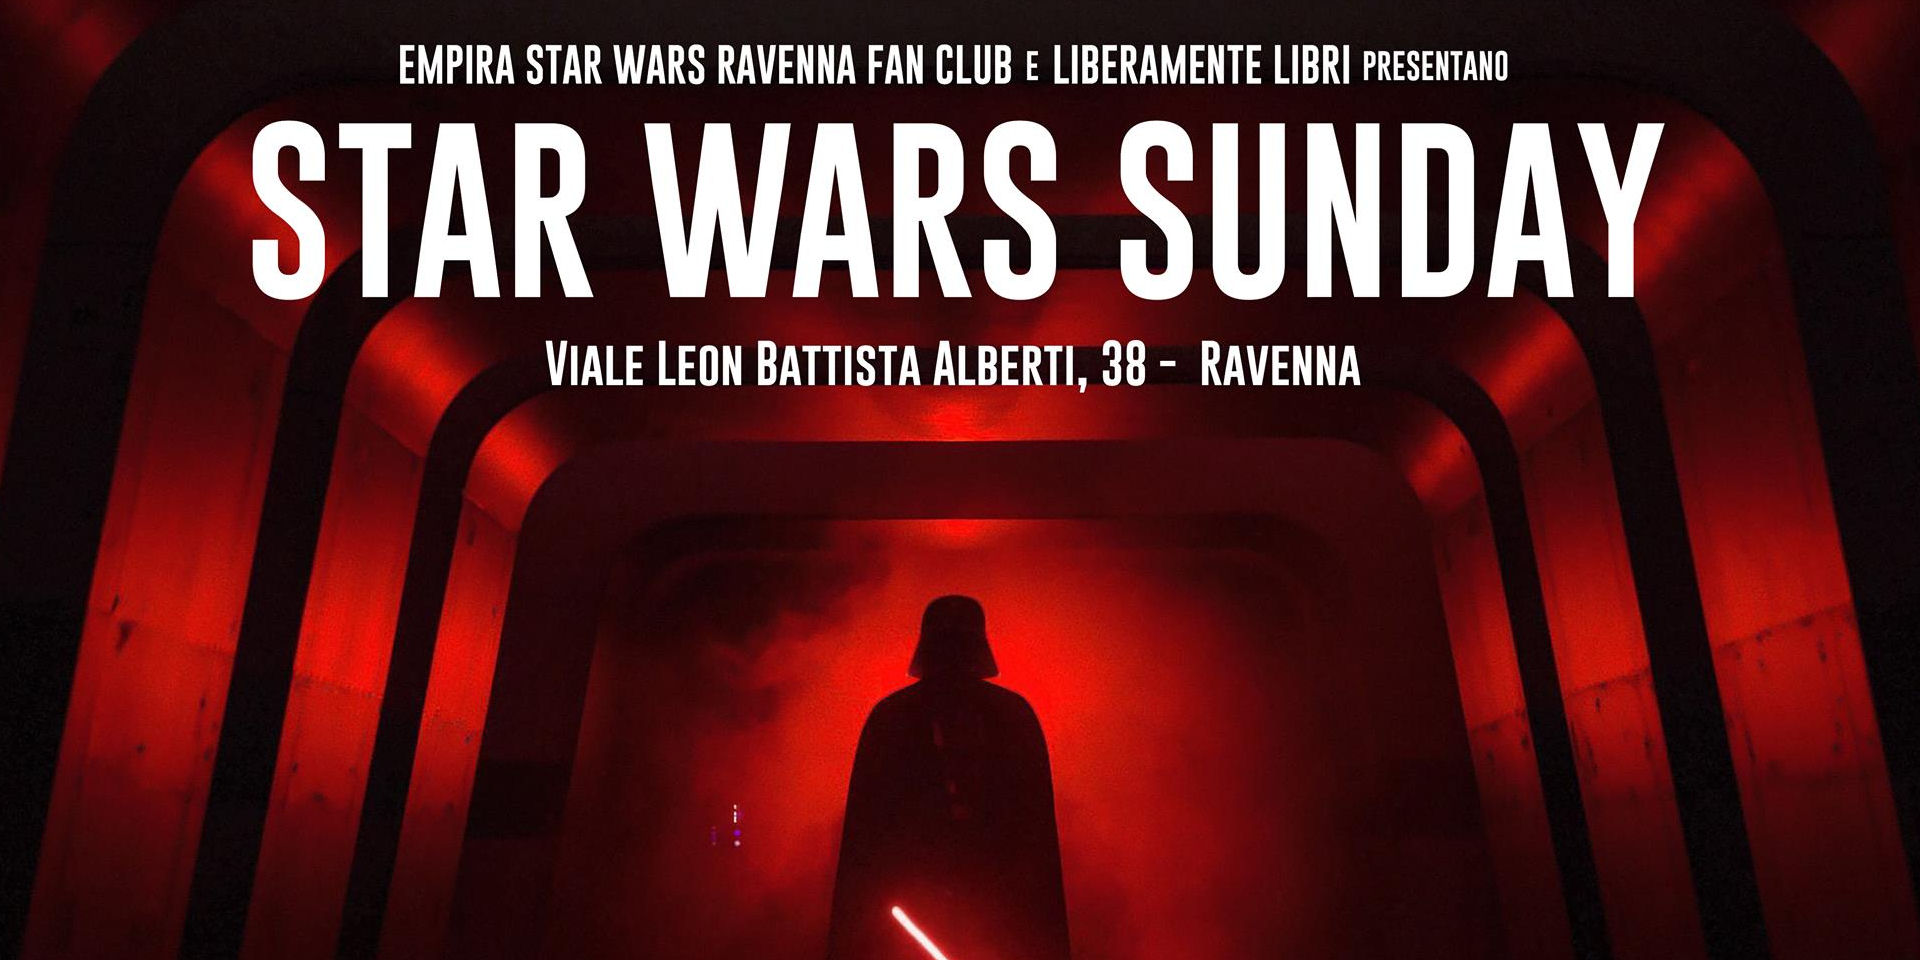 Star Wars Sunday 2017